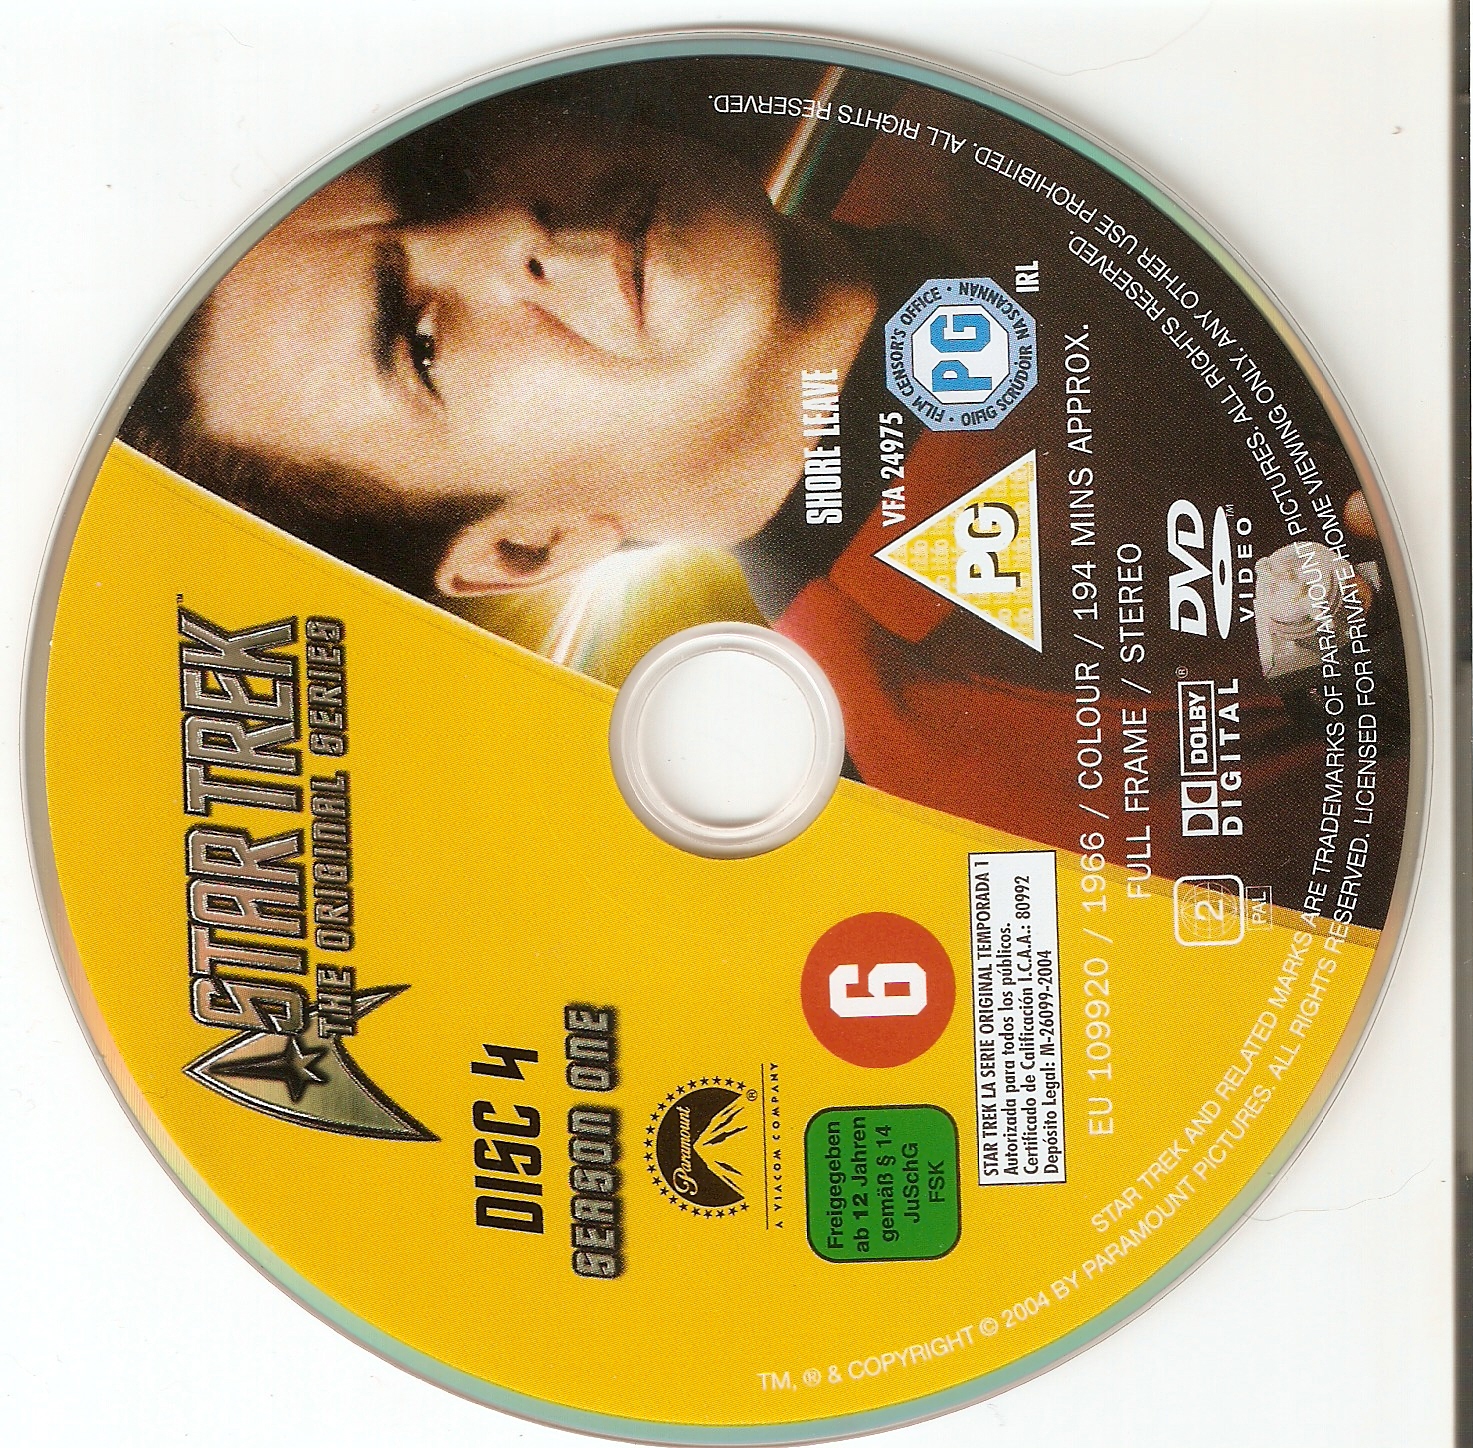 Star trek saison 1 DVD 4